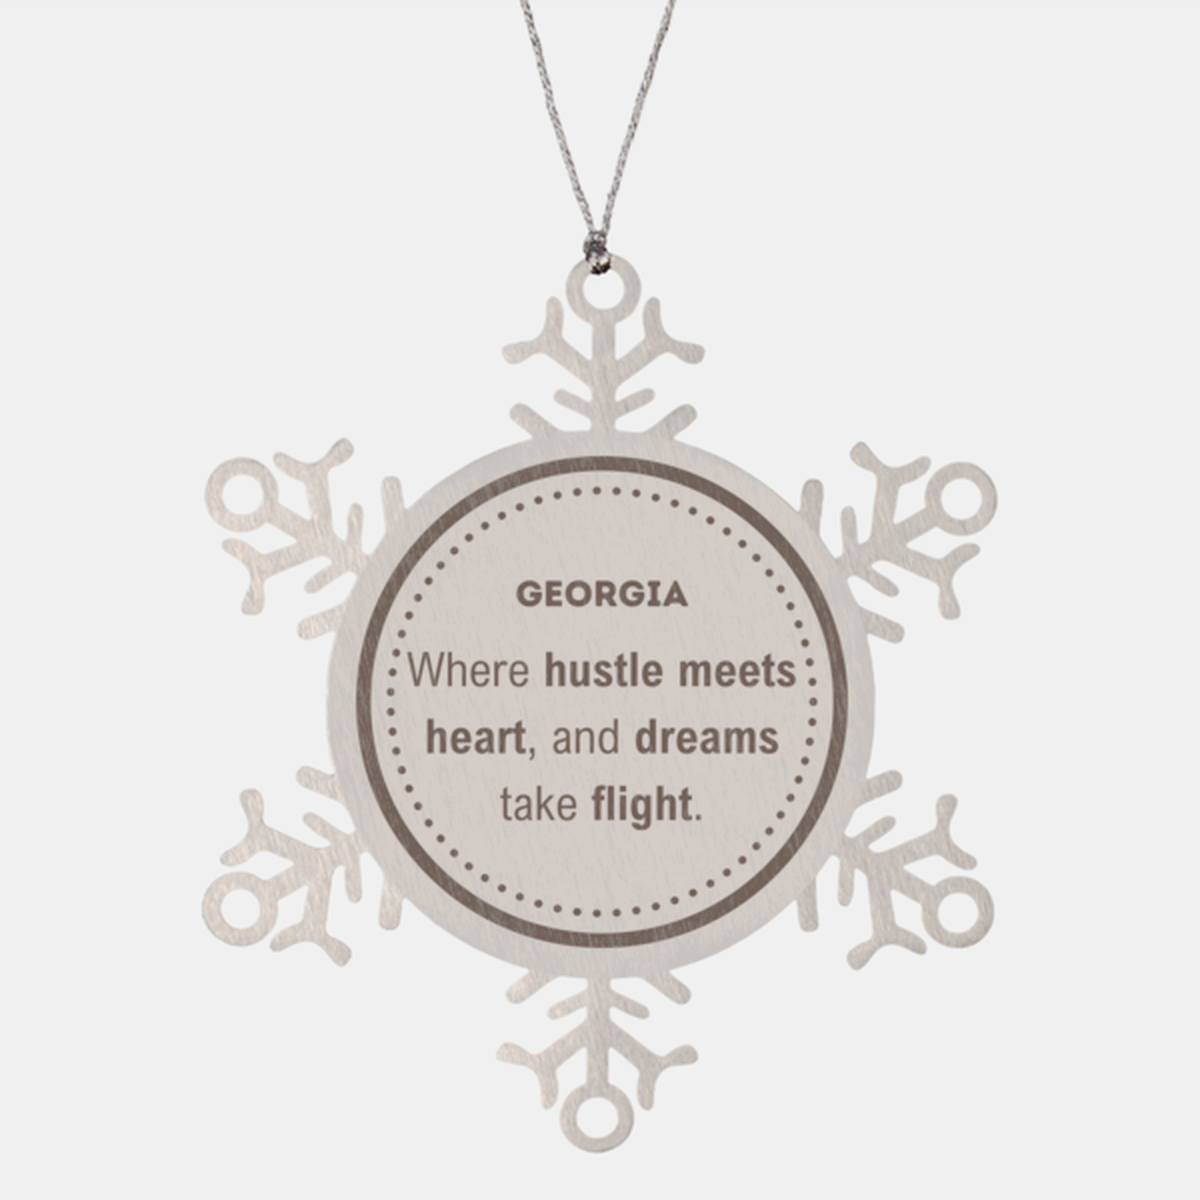 Georgia: Where hustle meets heart, and dreams take flight, Georgia Ornament Gifts, Proud Georgia Christmas Georgia Snowflake Ornament, Georgia State People, Men, Women, Friends